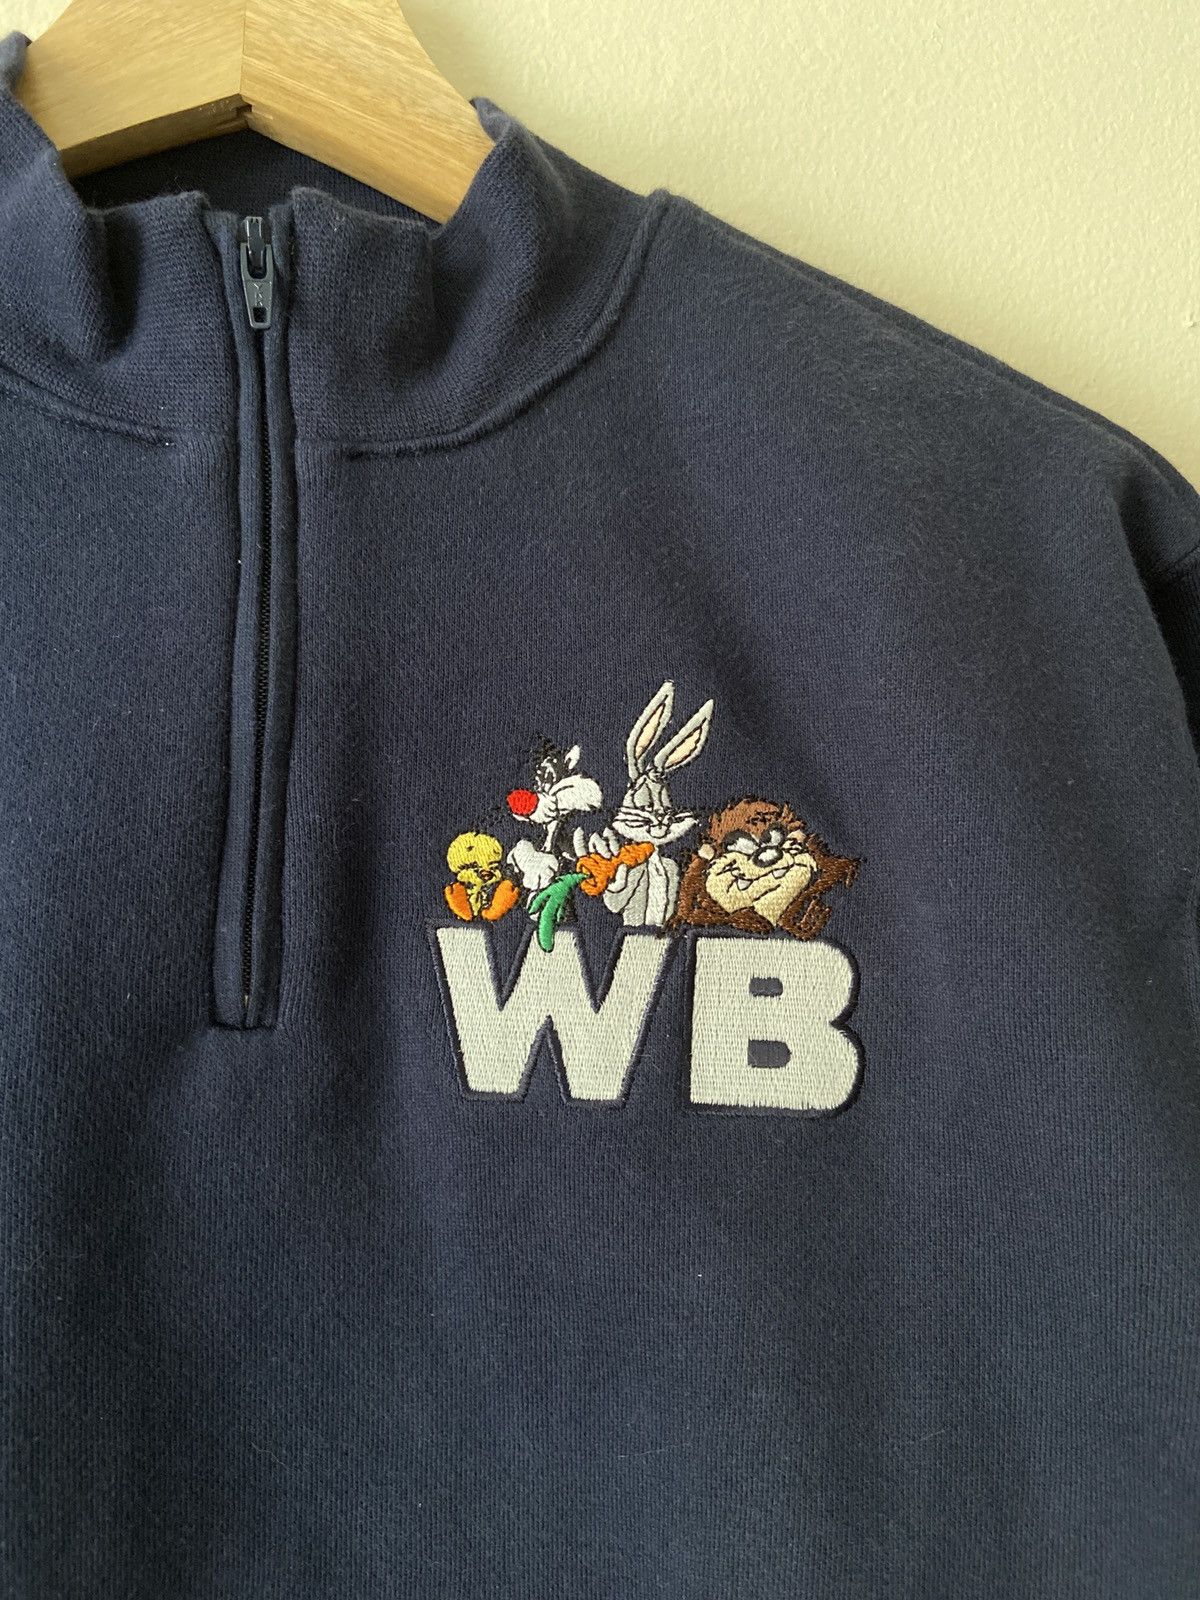 Vintage Vintage 90’s Bugs Bunny Tweety Warner Brothers sweatshirt Size US S / EU 44-46 / 1 - 3 Thumbnail